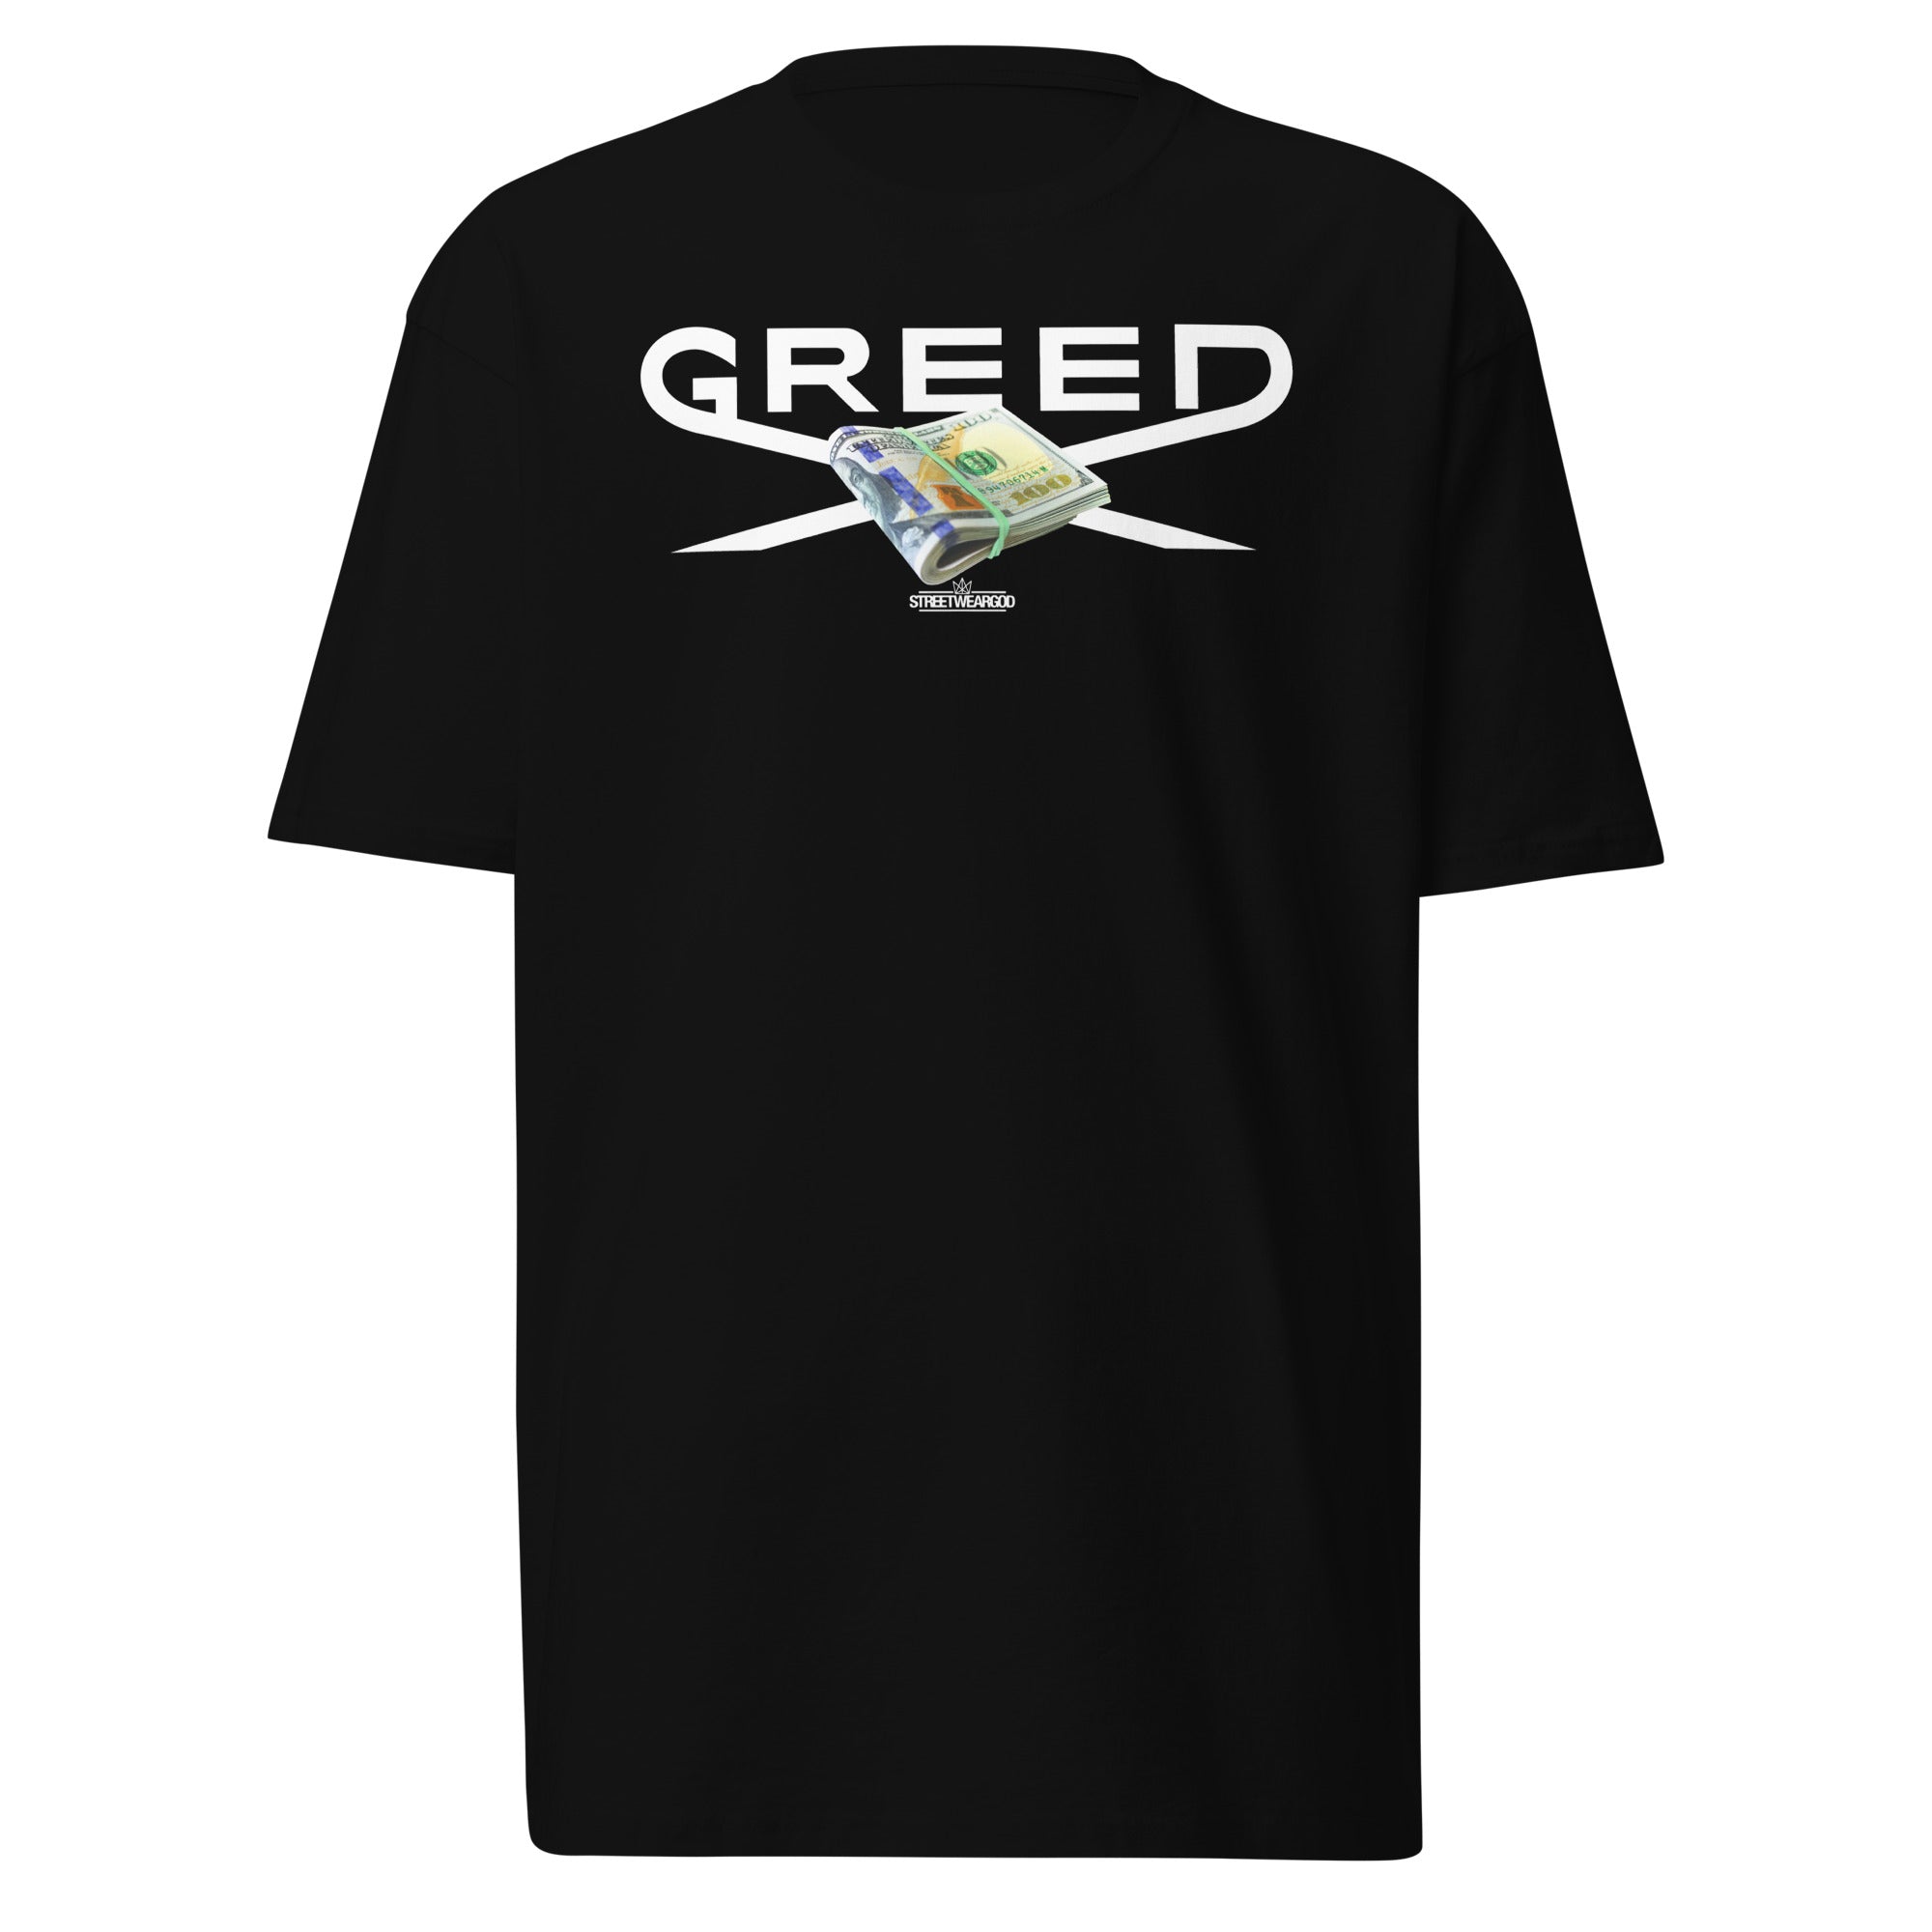 Greed black premium heavyweight tee